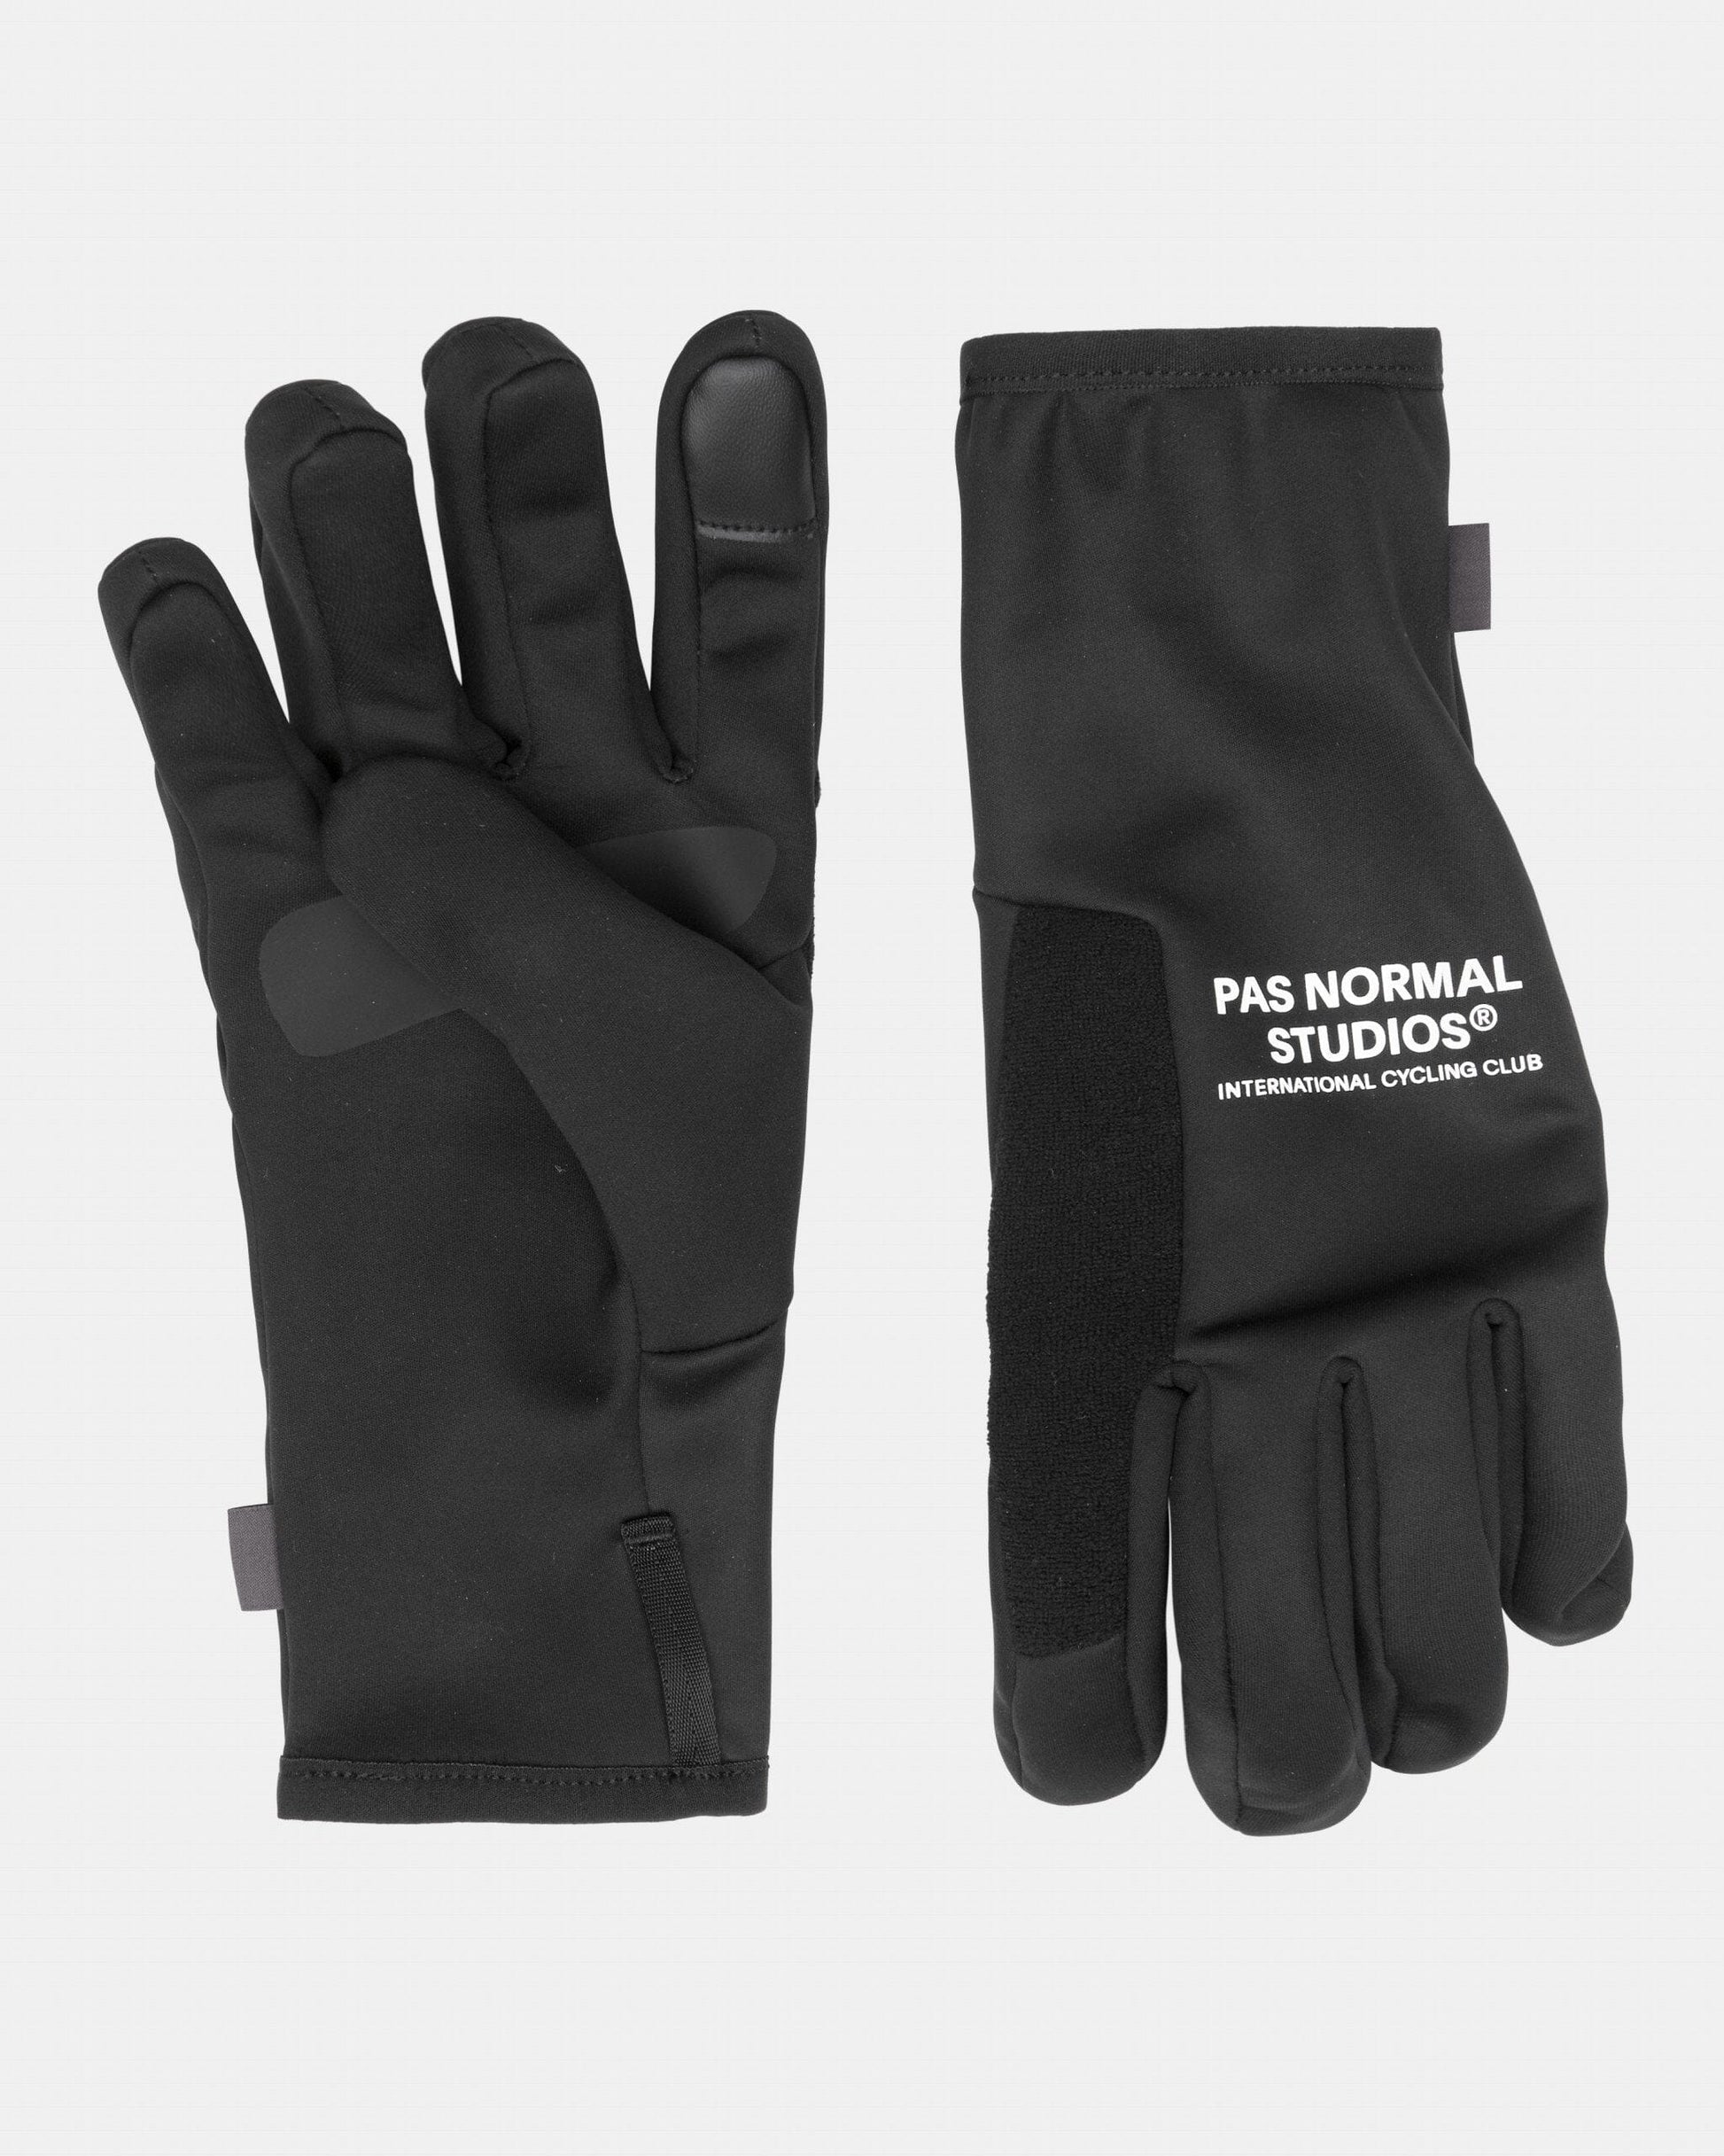 Pas Normal Studios - Thermal Gloves Gloves Pas Normal Studios 